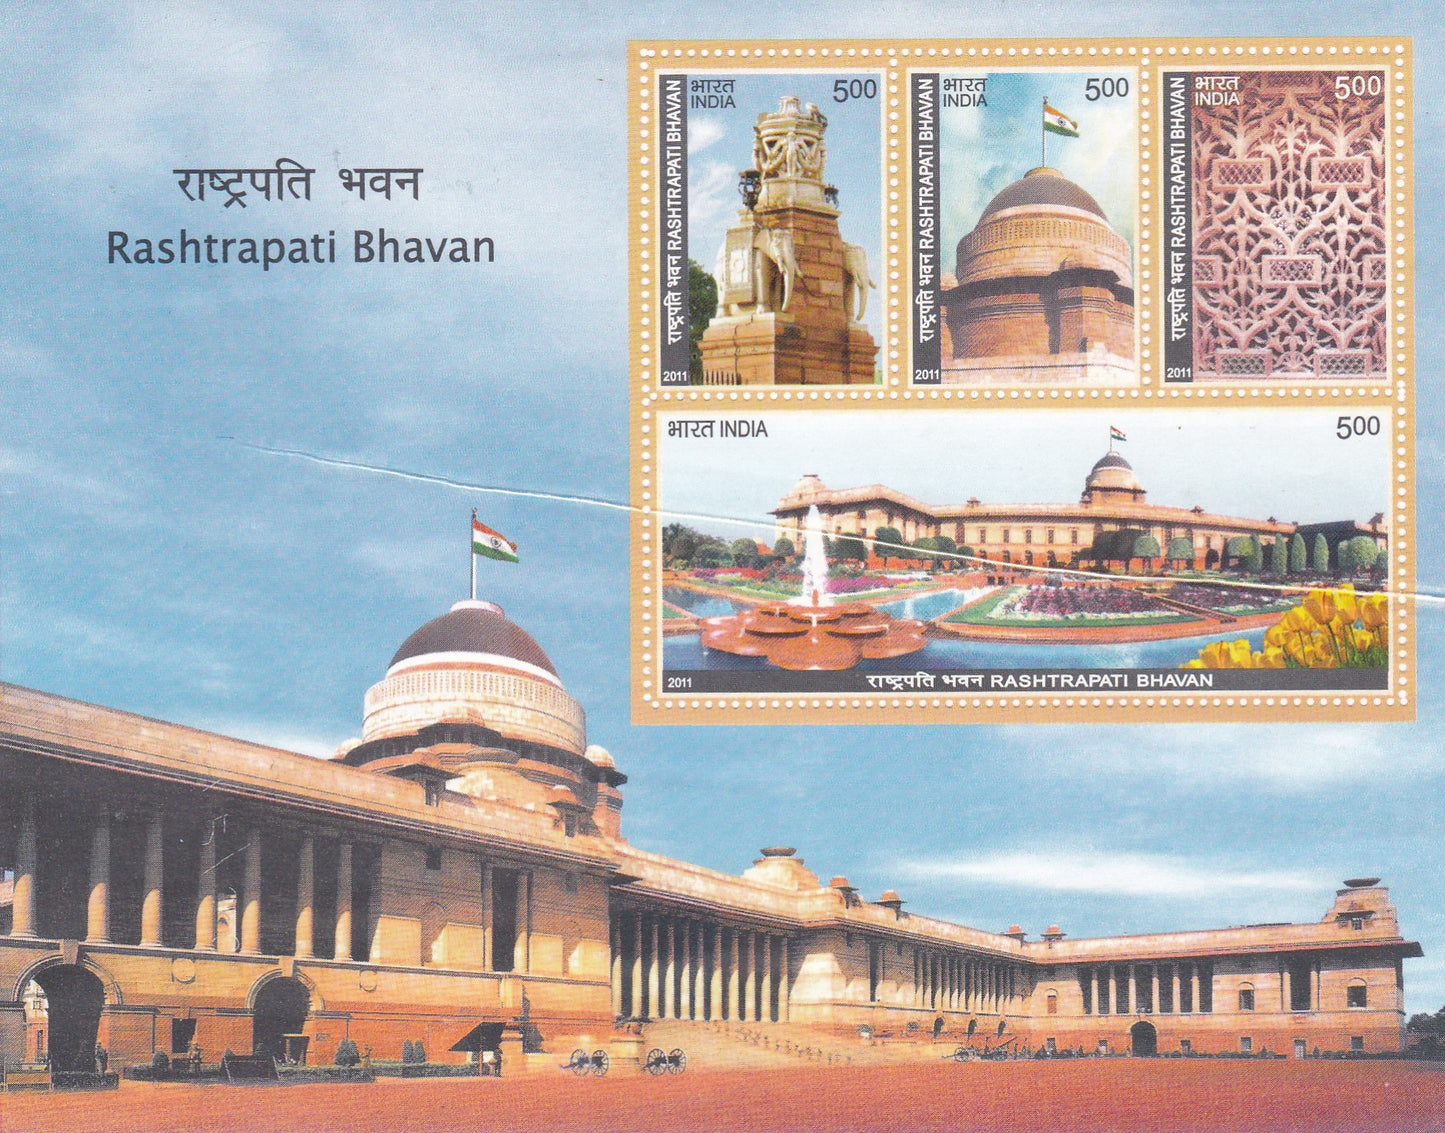 India -2011 Rashtrapati Bhavan error MS printed on creased paper